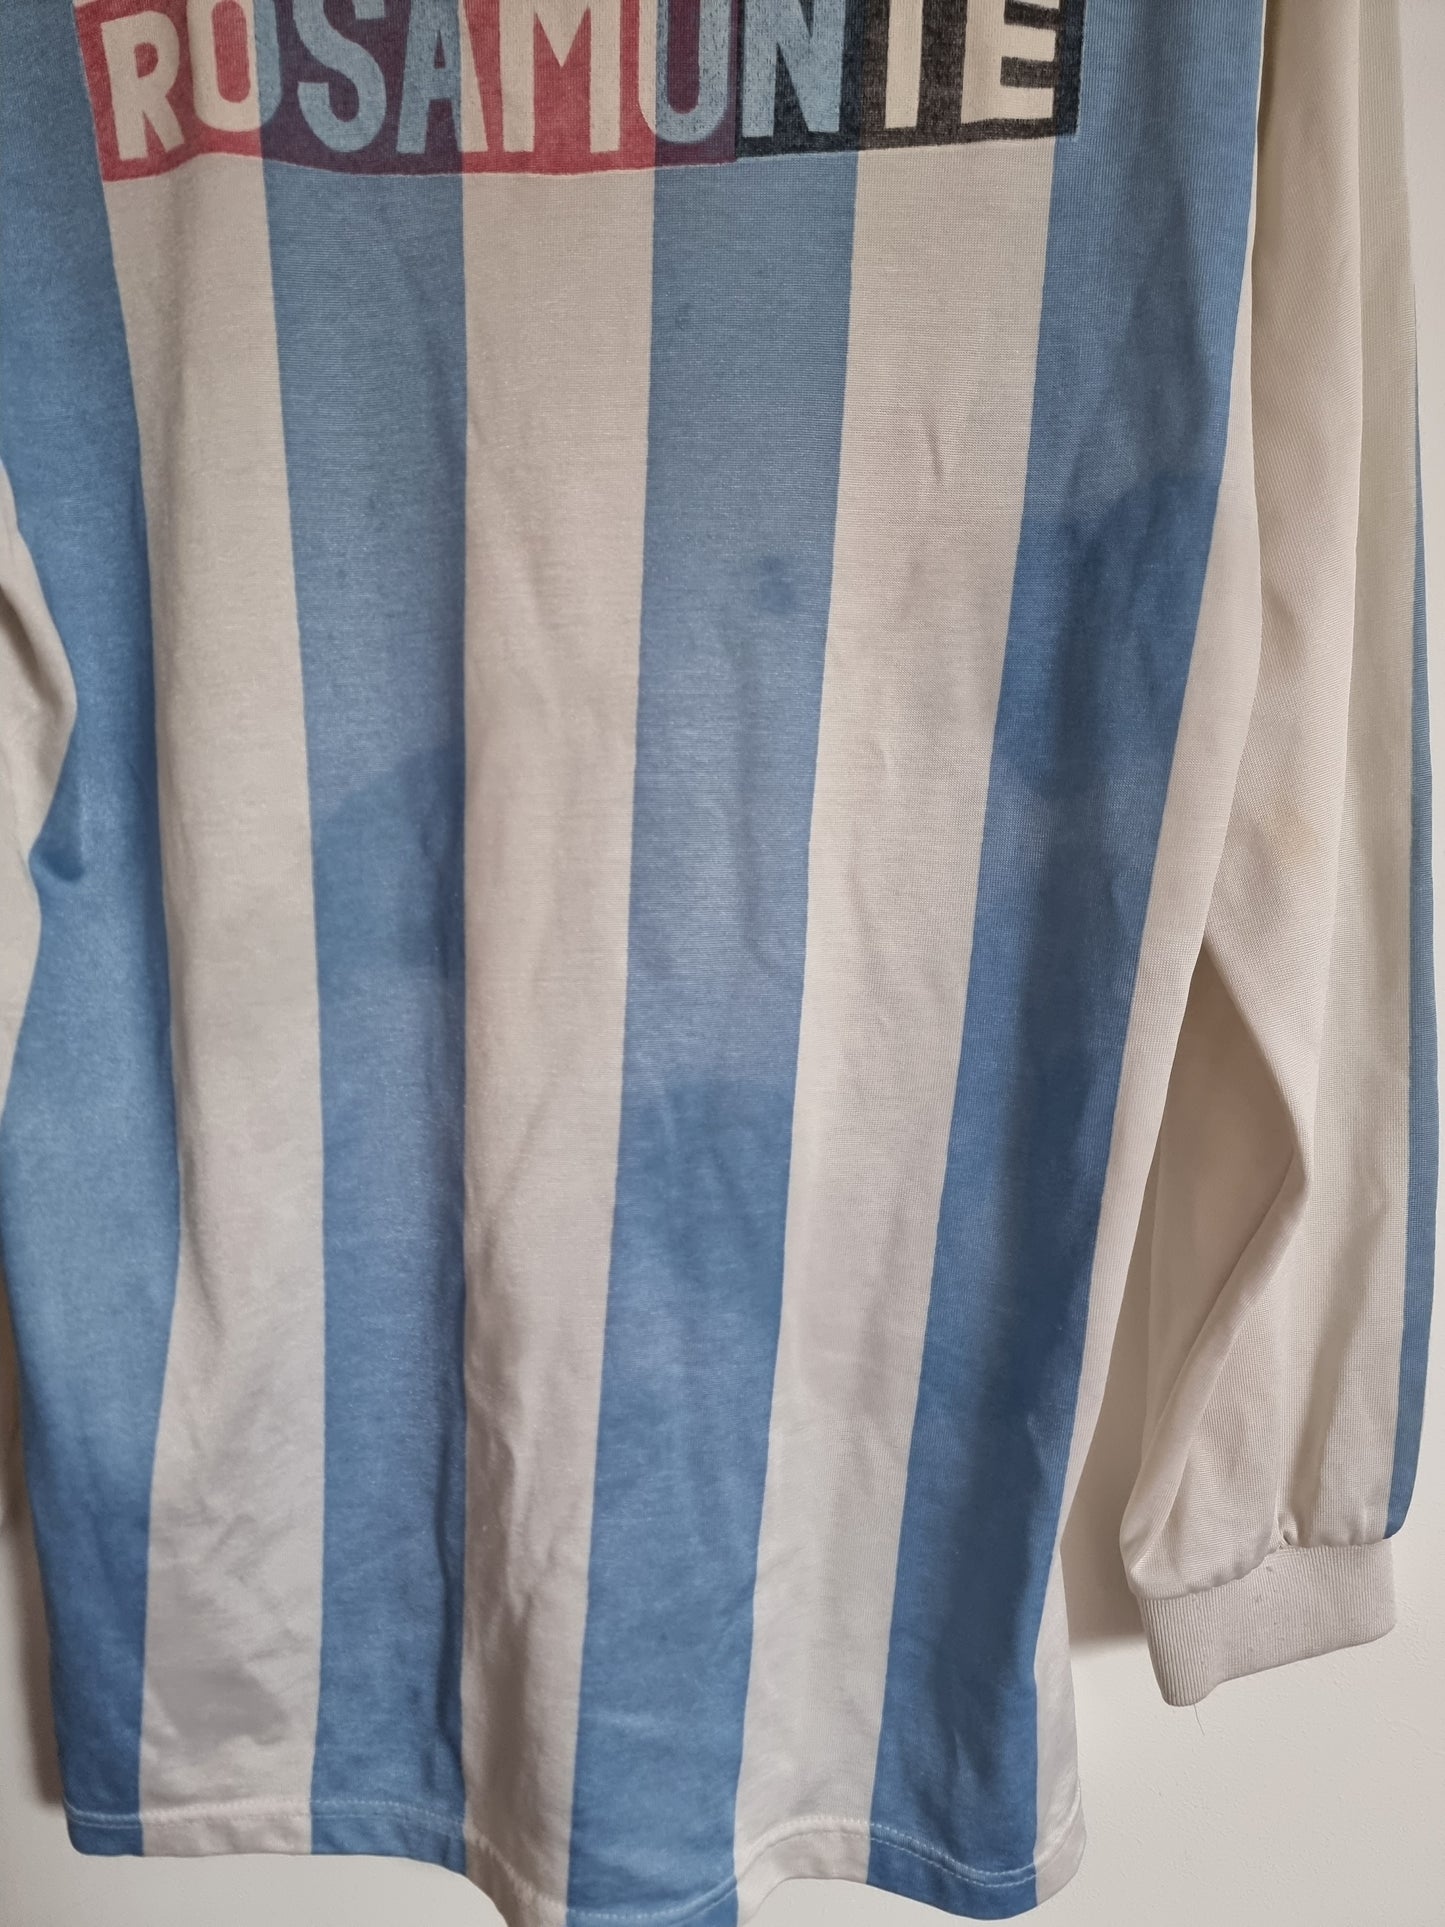 Adidas Racing Club 91/92 Long Sleeve Home Shirt Medium